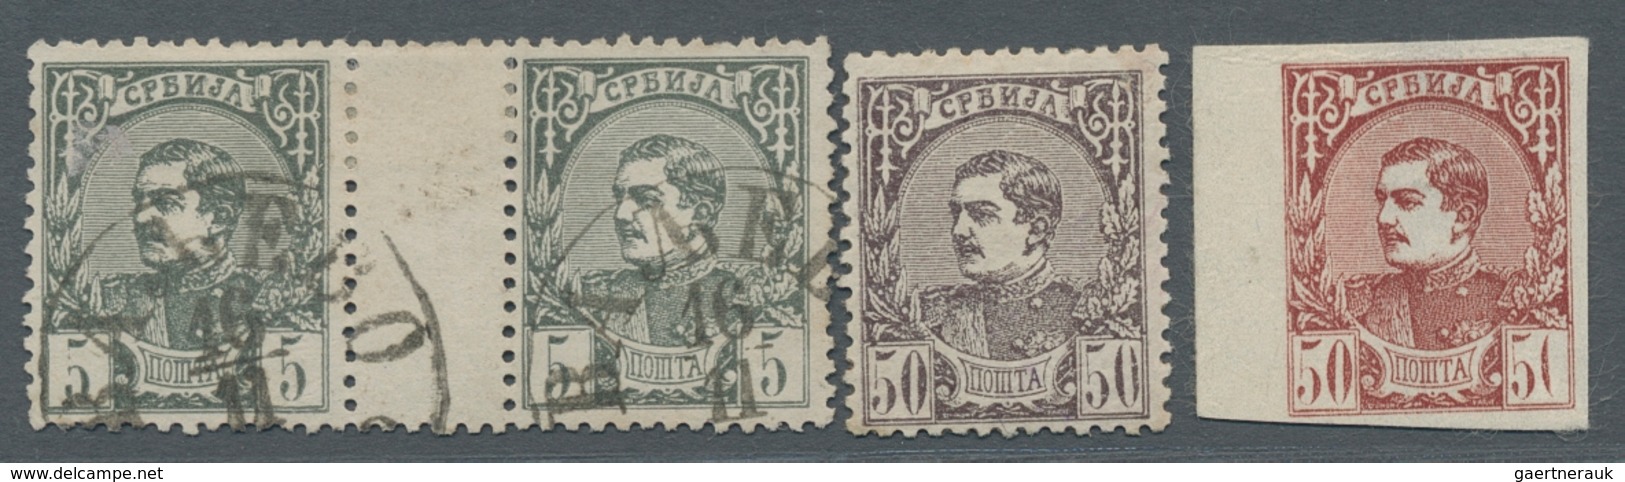 Serbien: 1880, Definitives "Milan", Specialised Assortment Of 32 Stamps Incl. Complete Set Blocks Of - Serbie